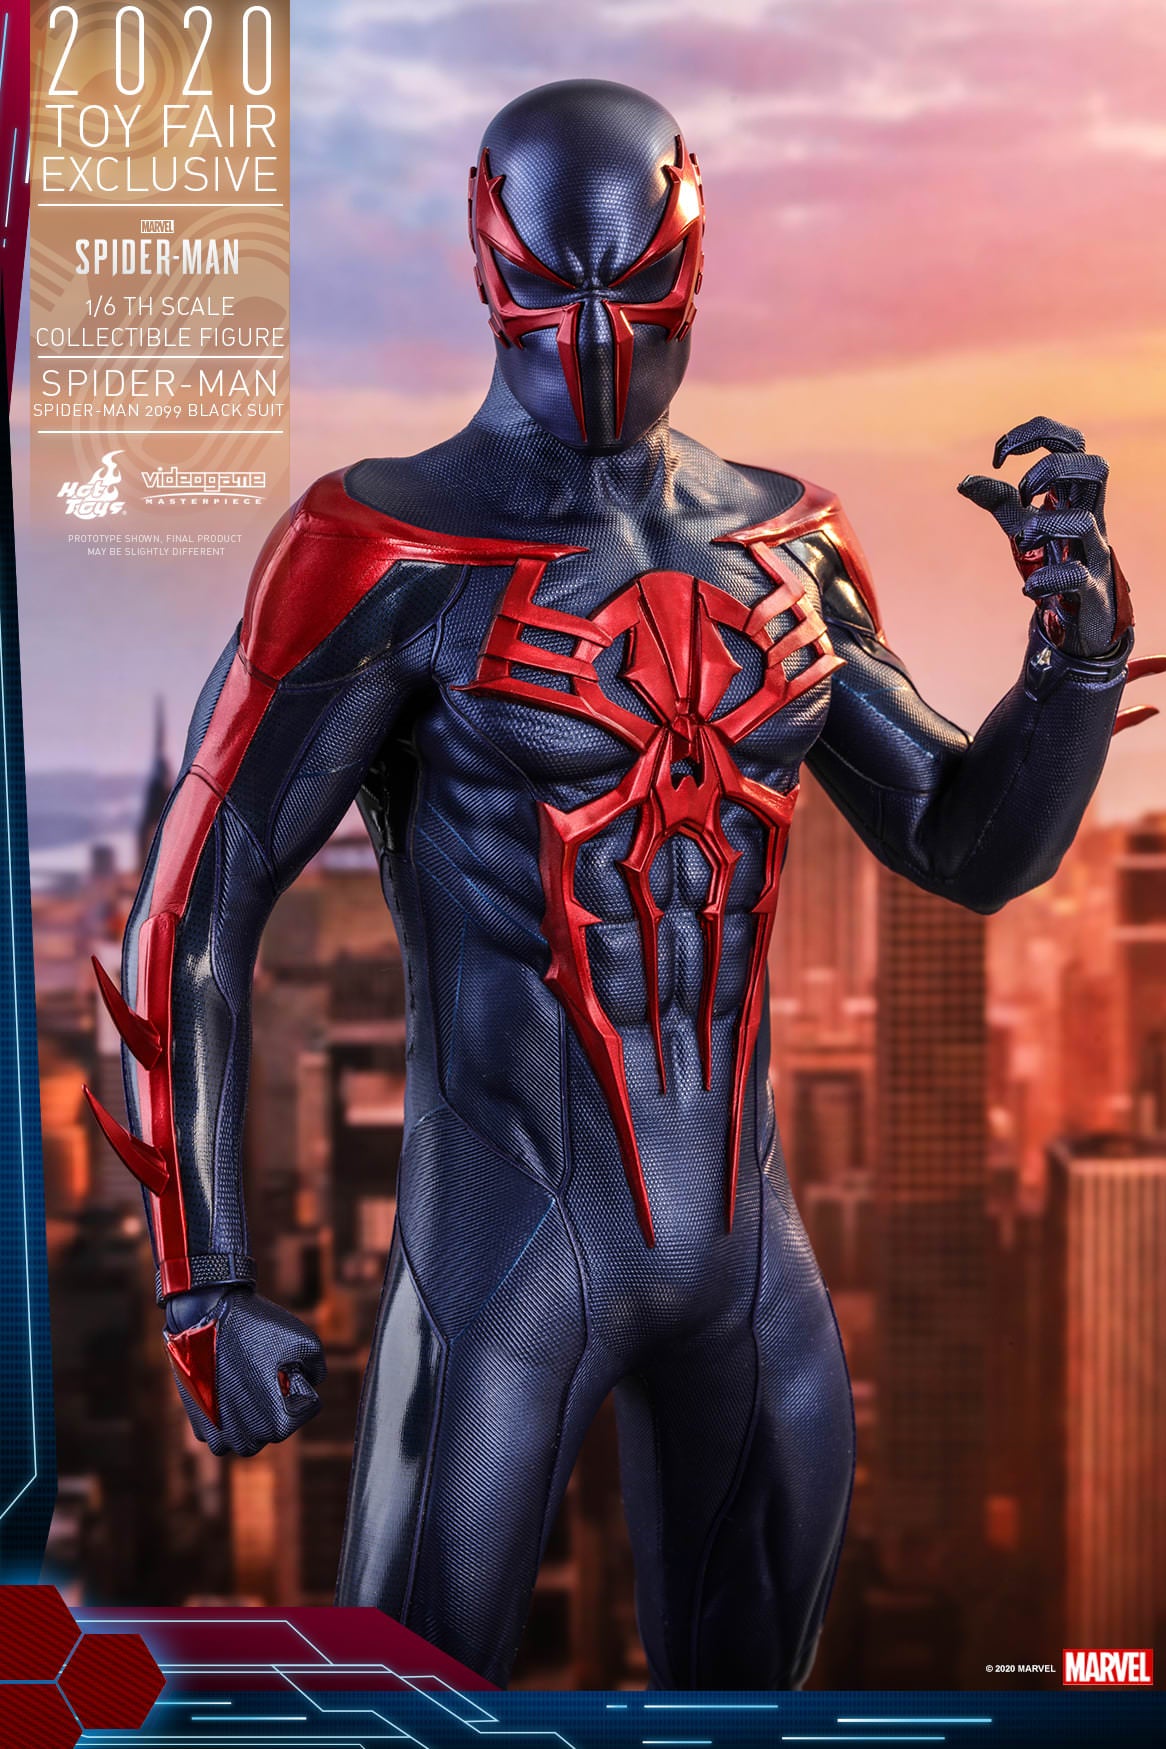 Spider-Man 2099 Black Suit - Marvel's Spider-Man Hot Toys